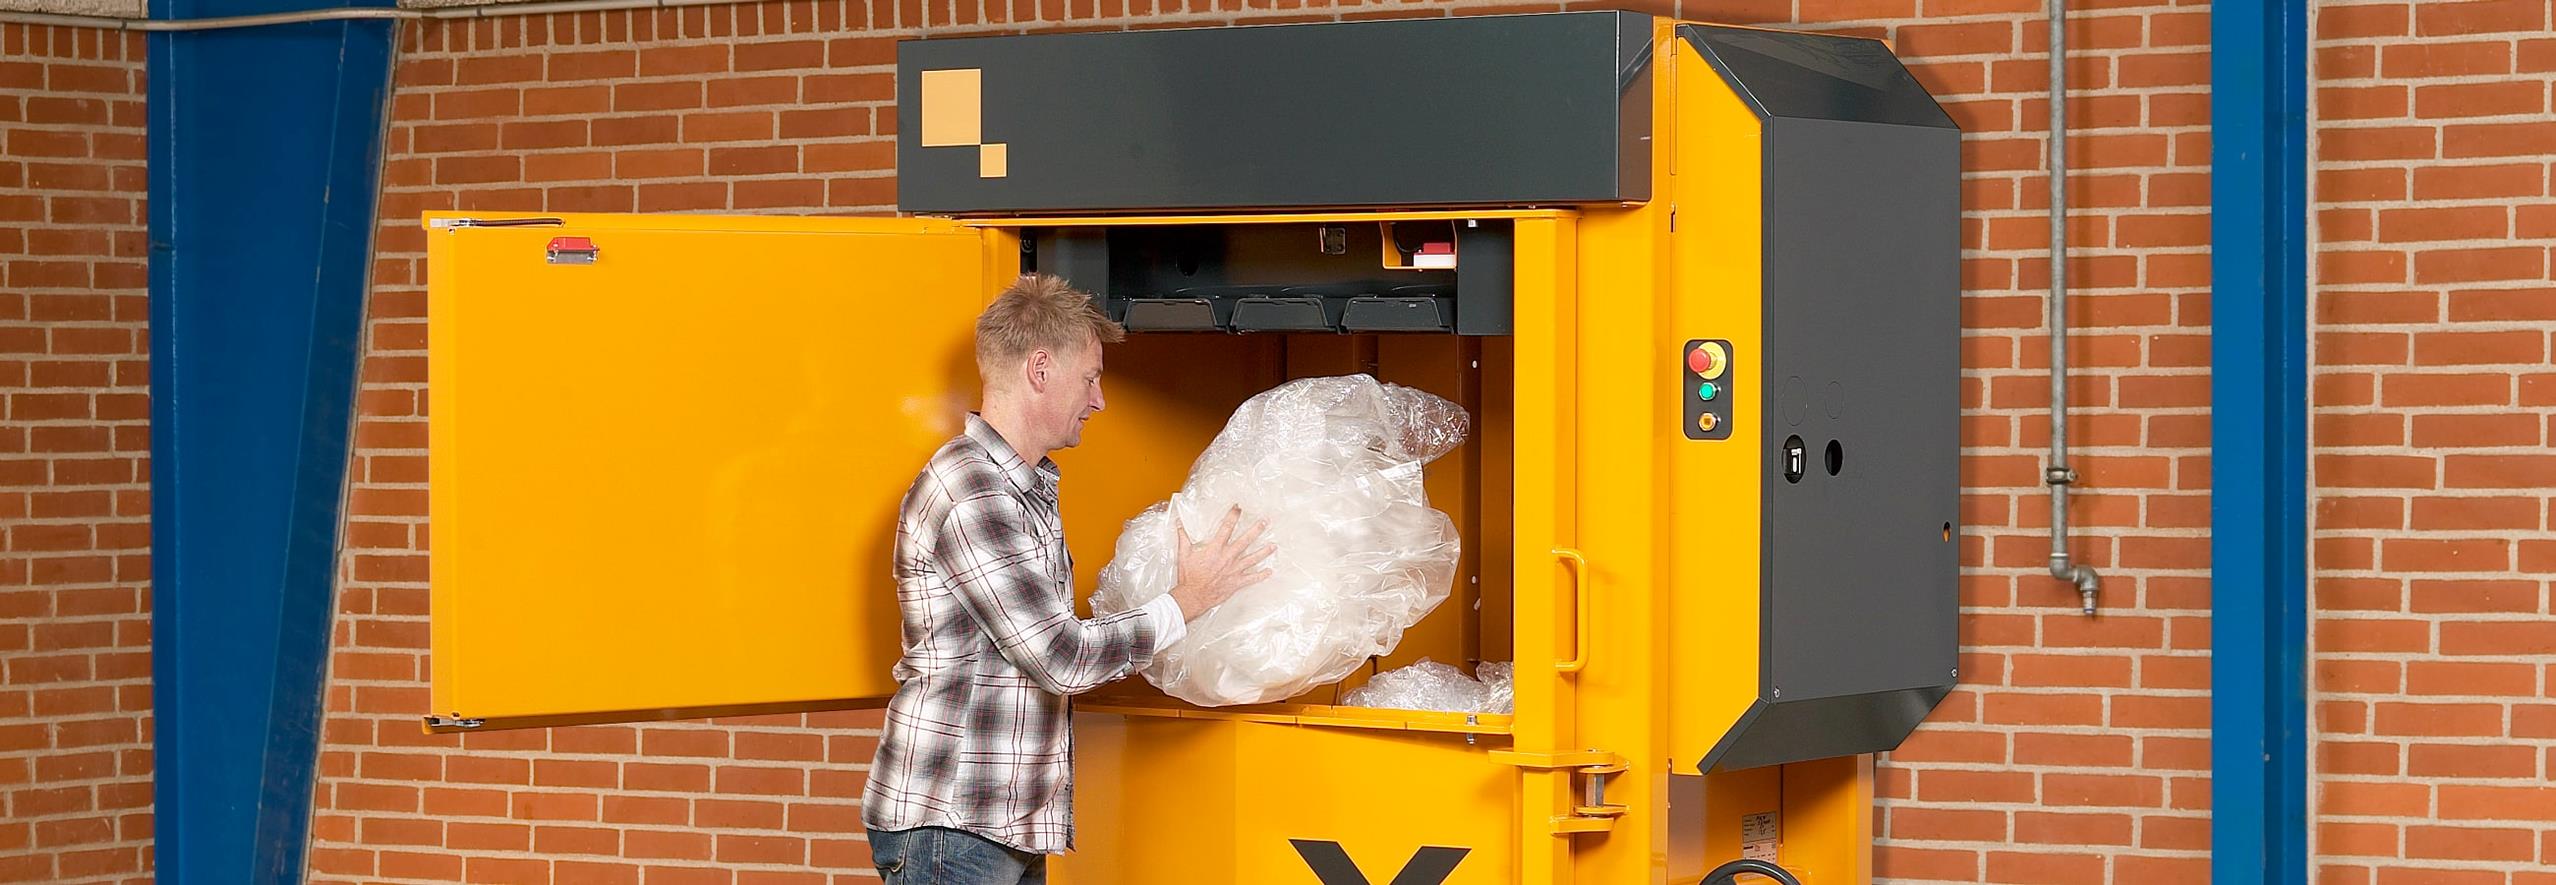 Man fills plastic waste into yellow baler